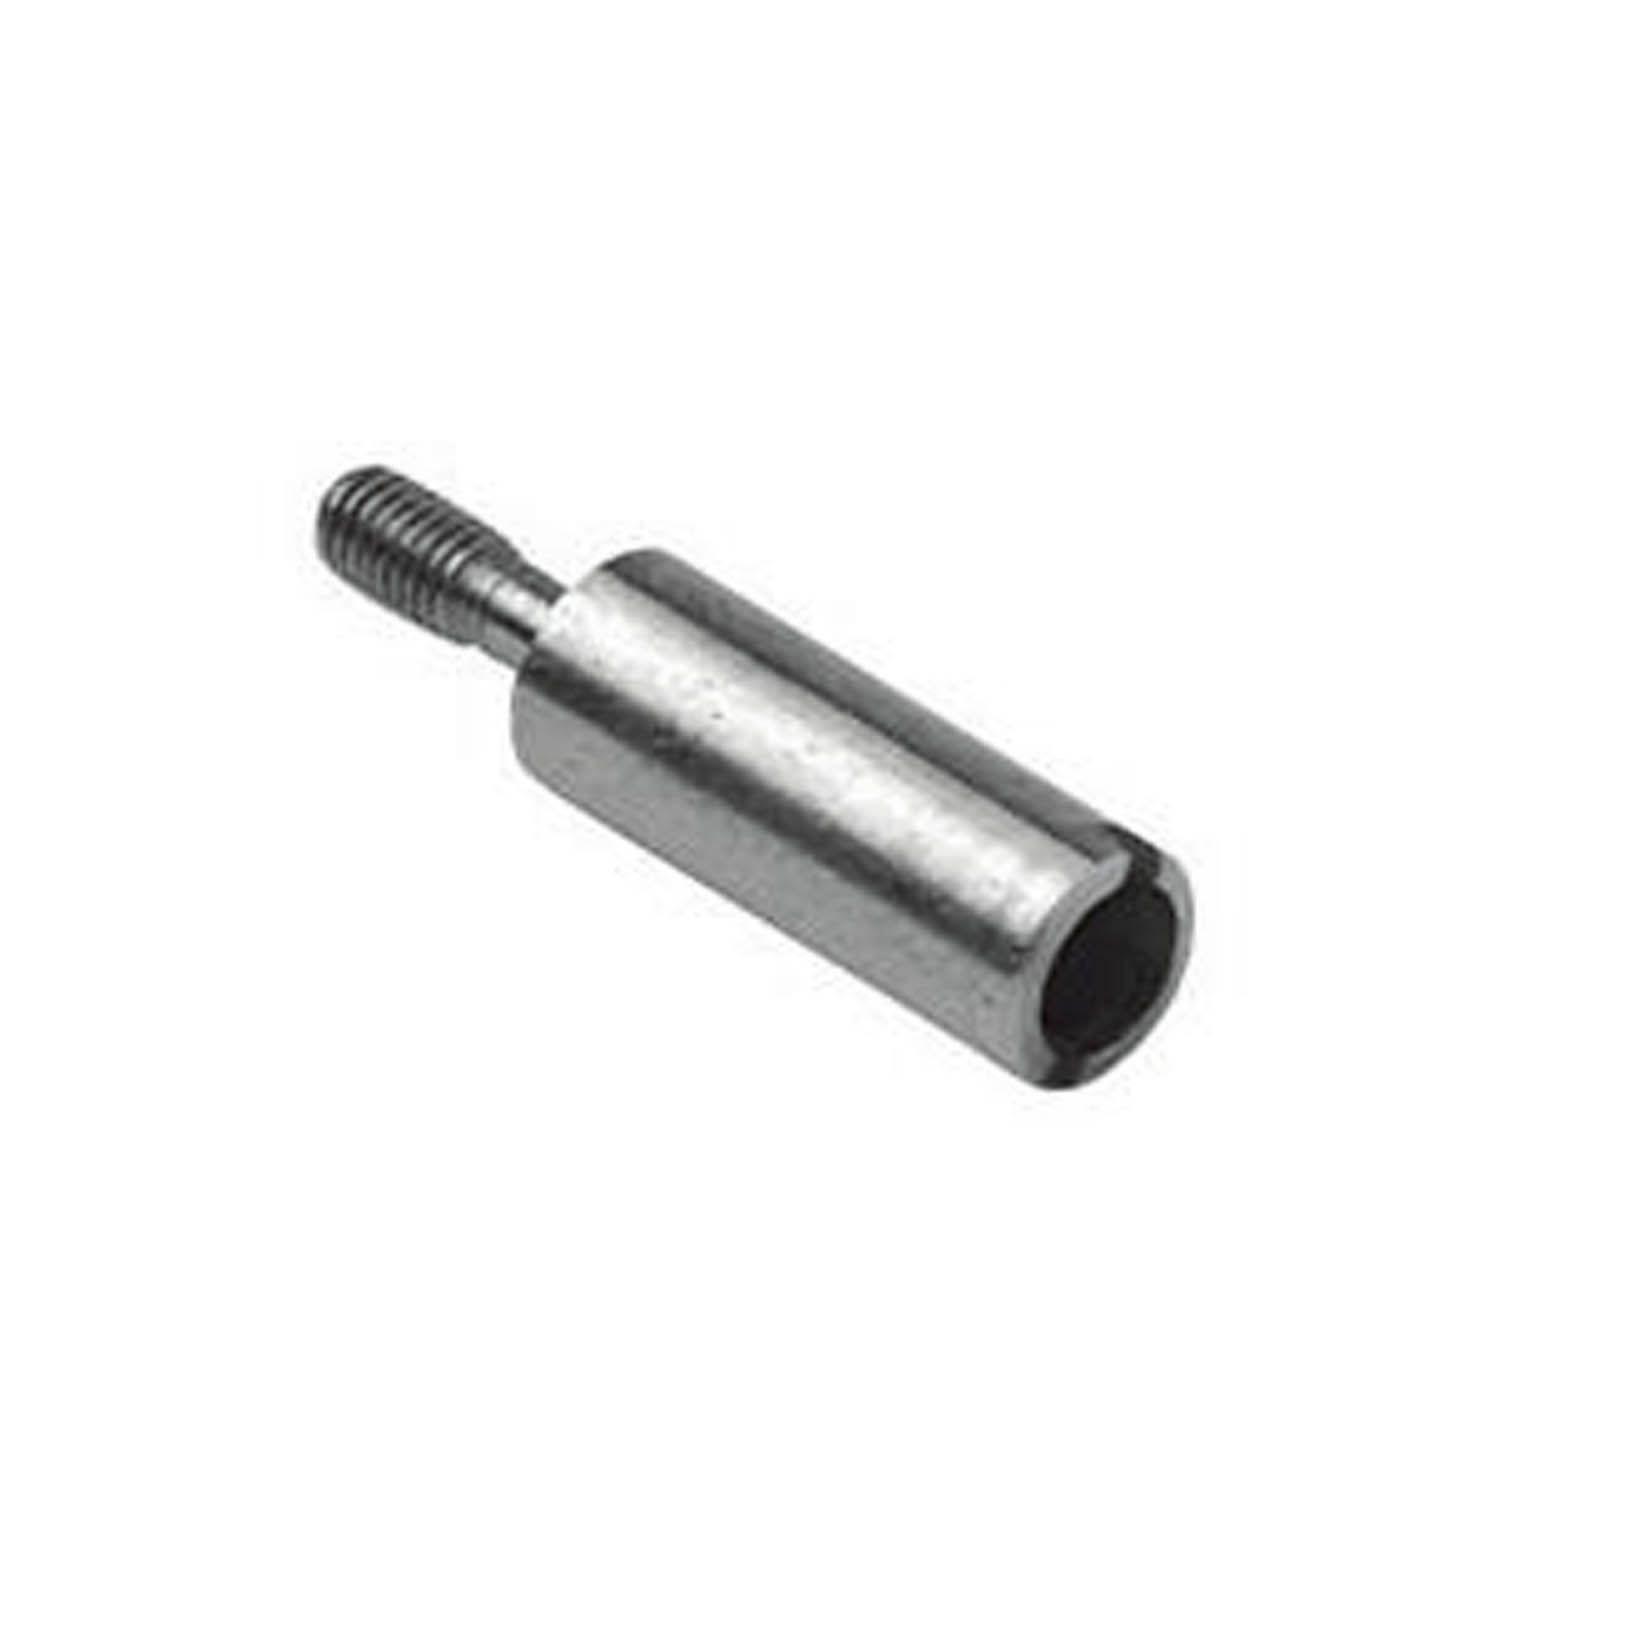 Mencom CRF Stainless Steel Female Coding Pin